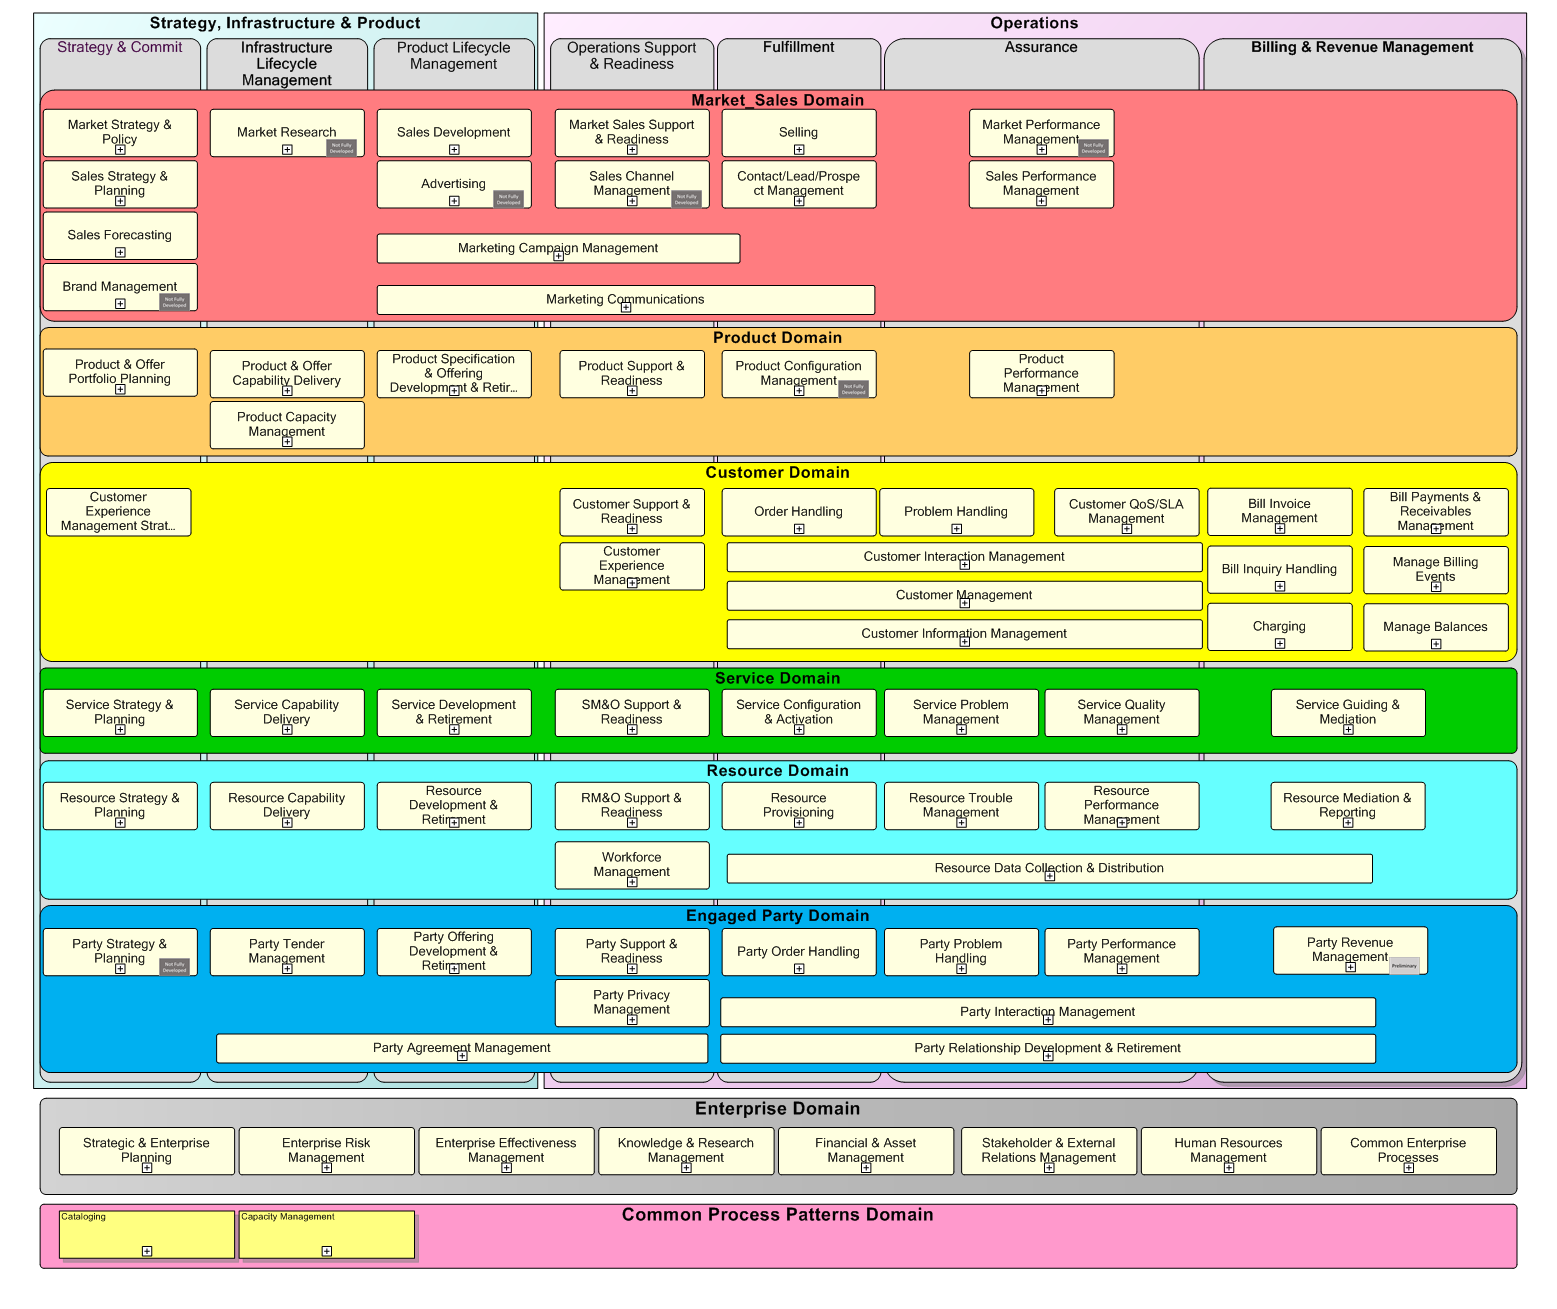 Business Process Framework Level 1 Overview - START HERE_16.5